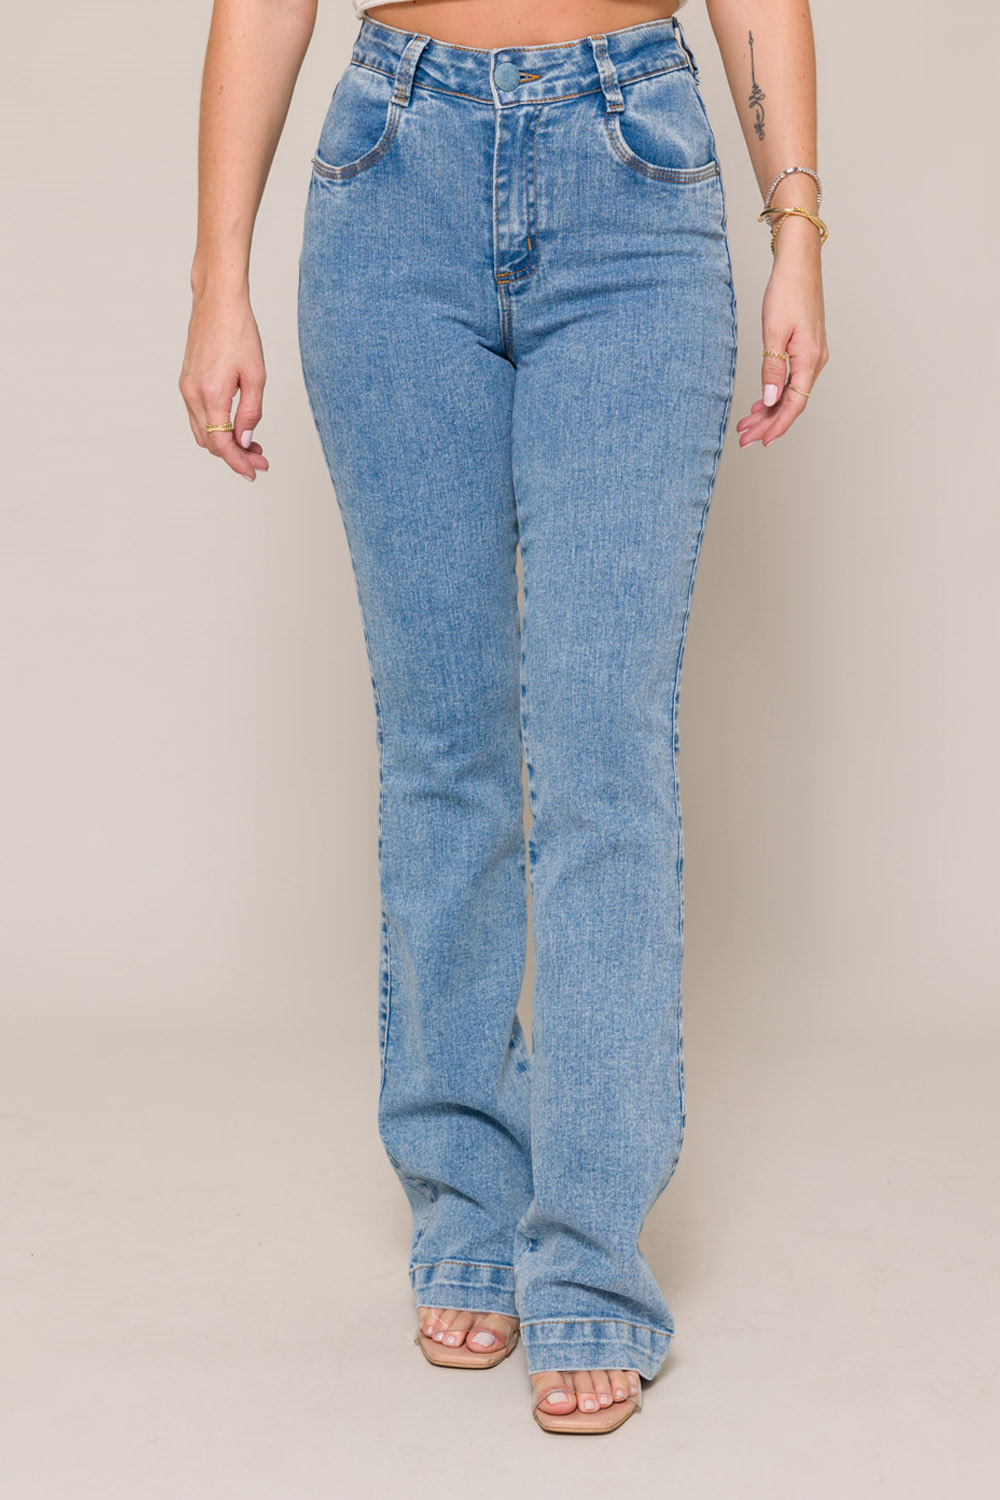 Calça Jeans Flare Basic 11642 - Jeans Claro 1